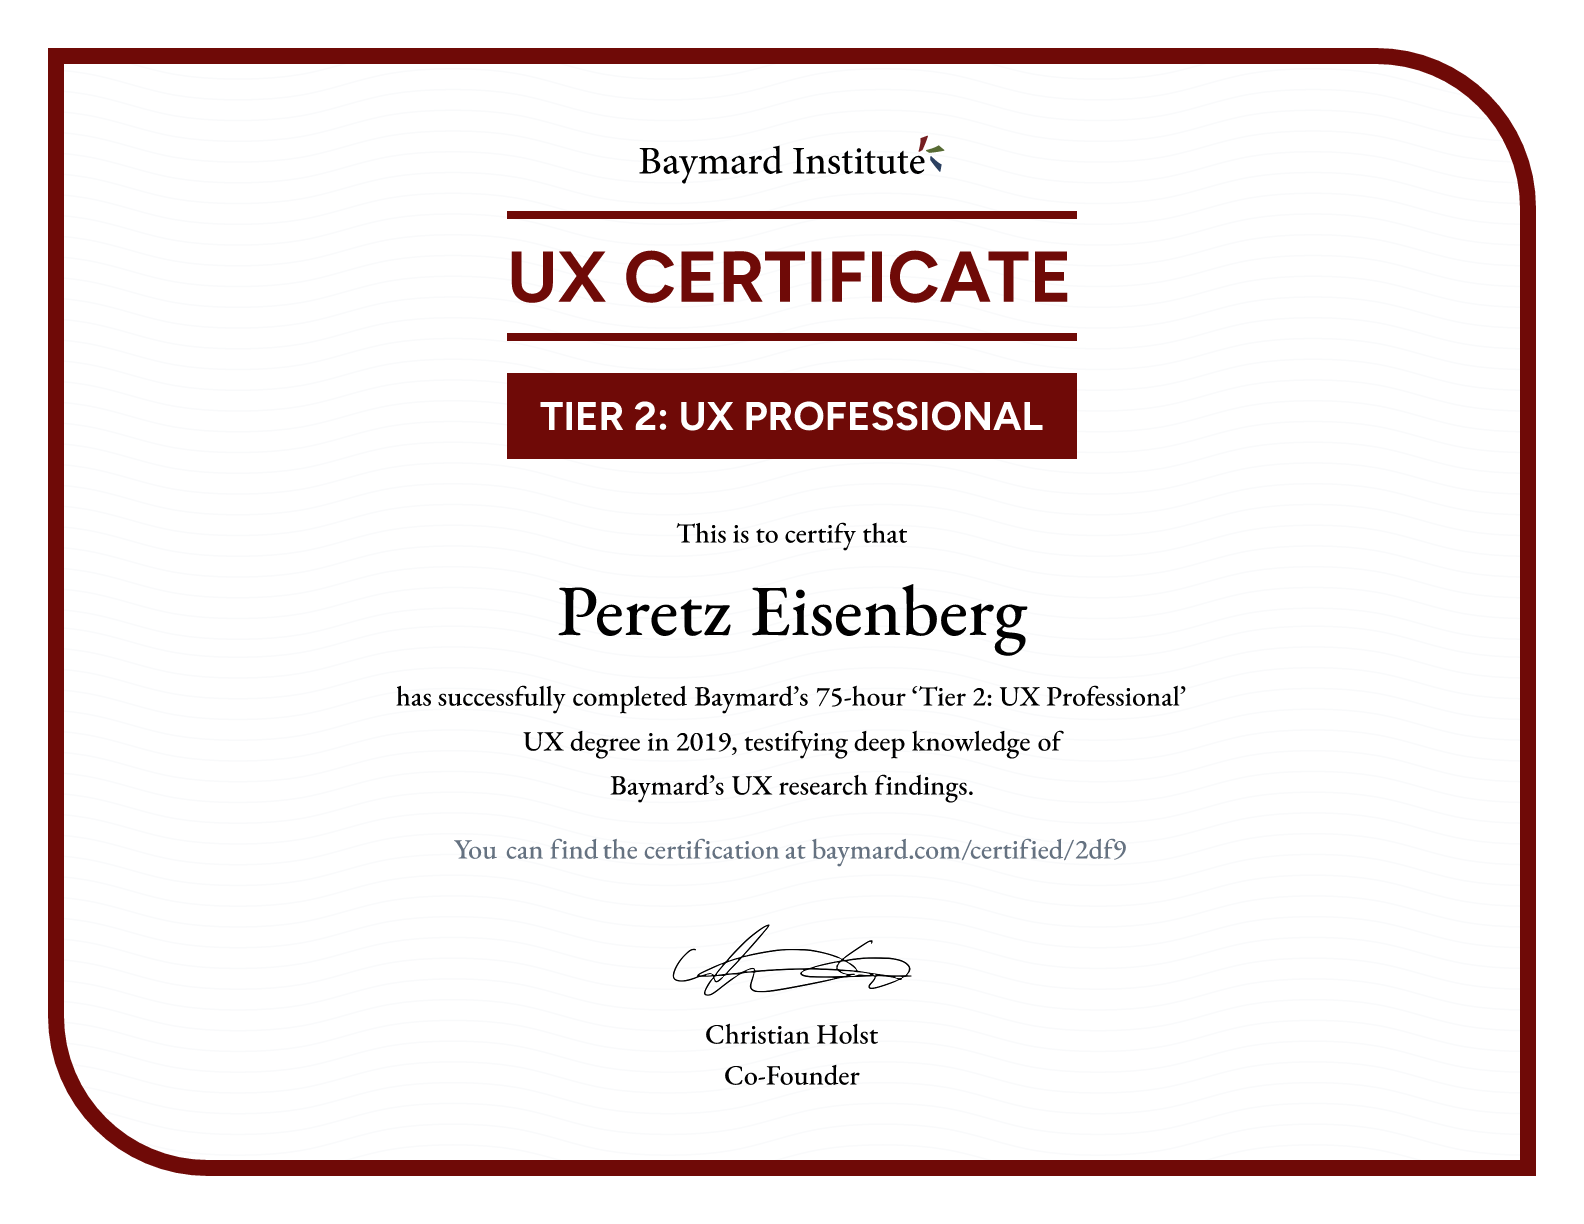 Peretz Eisenberg’s certificate